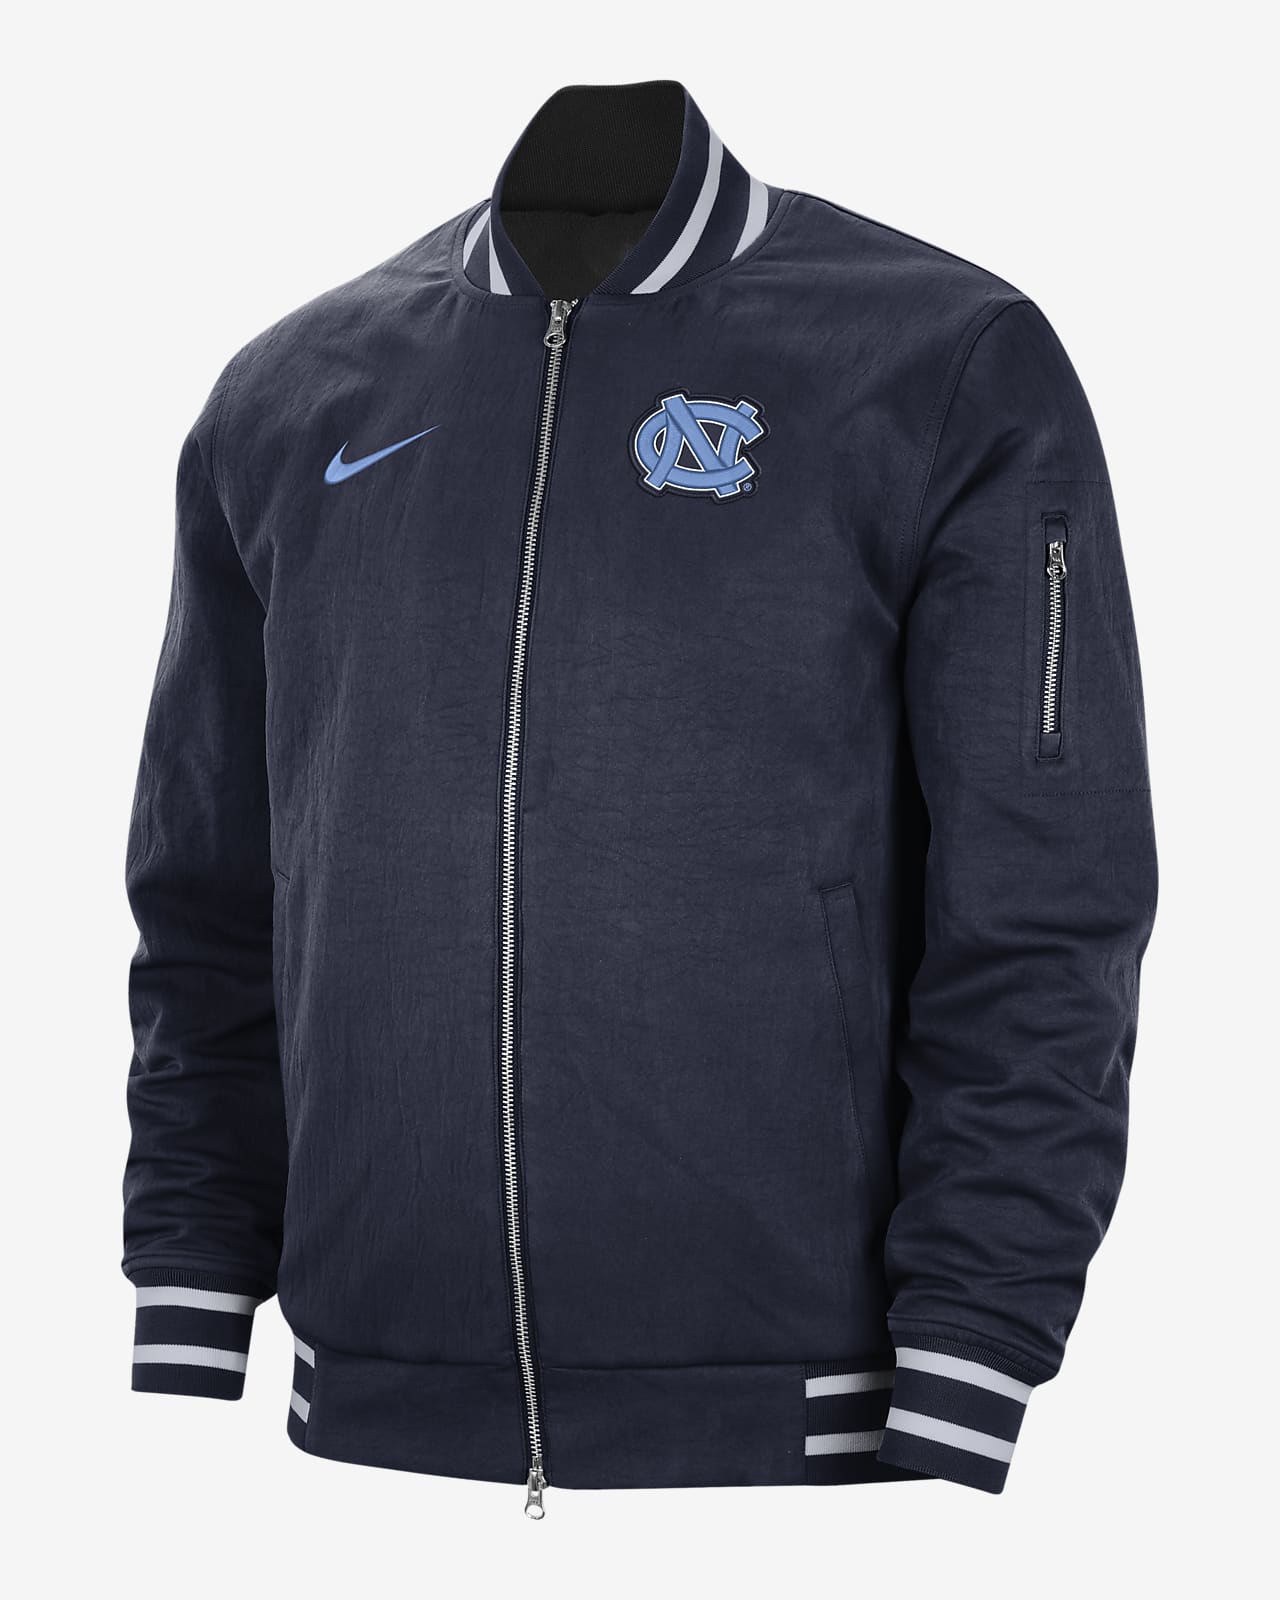 UNC Men's Nike College Bomber Jacket